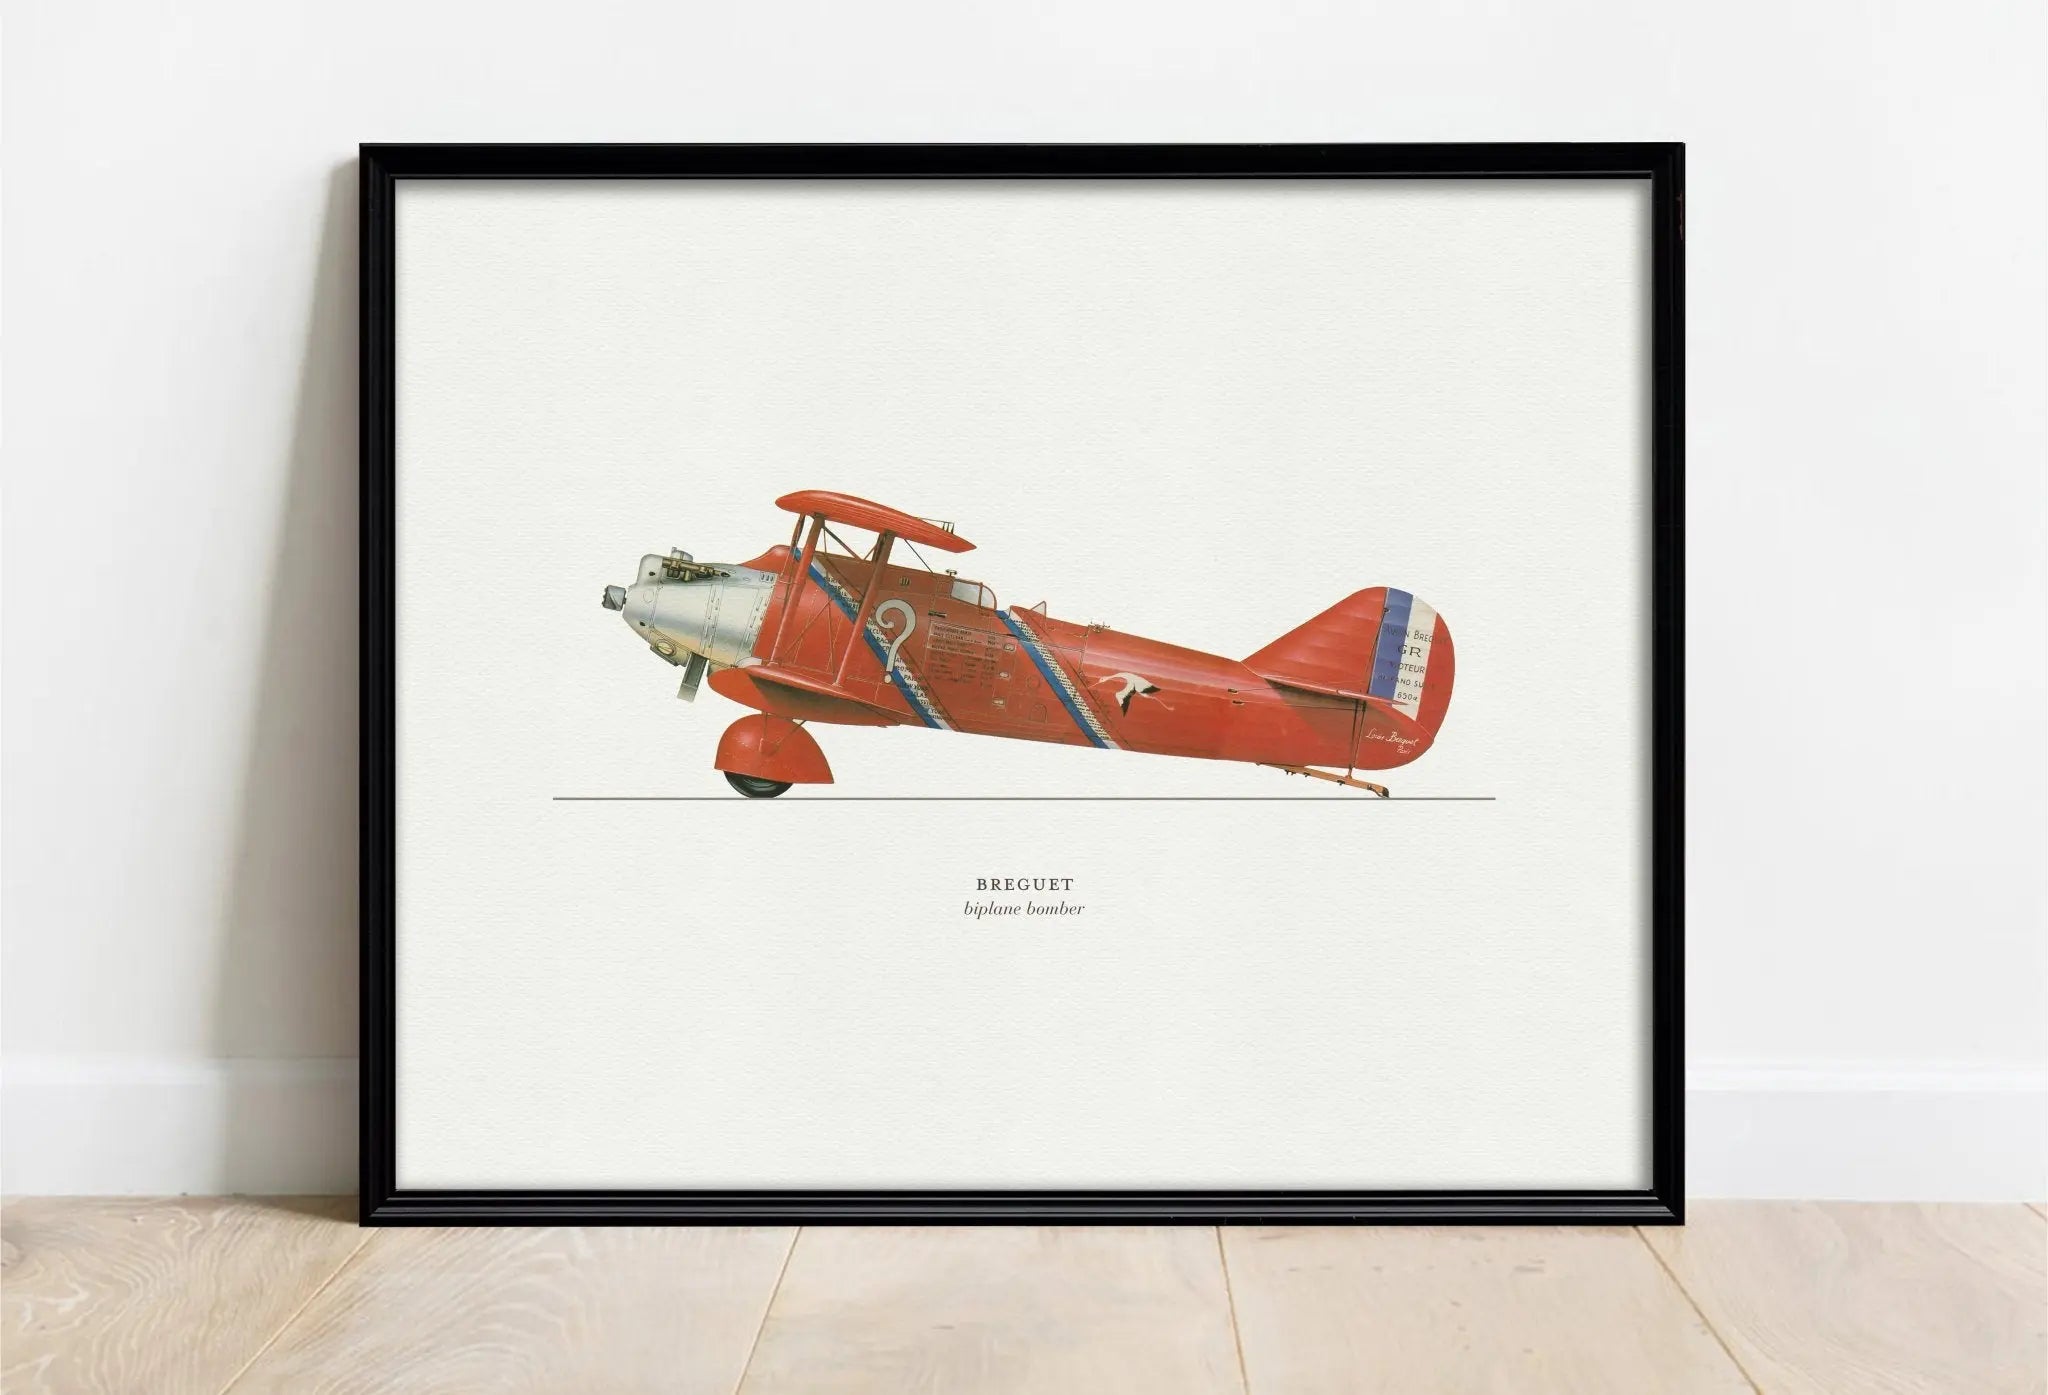 Vintage Lithographs: American + European Airplanes - Emblem Atelier